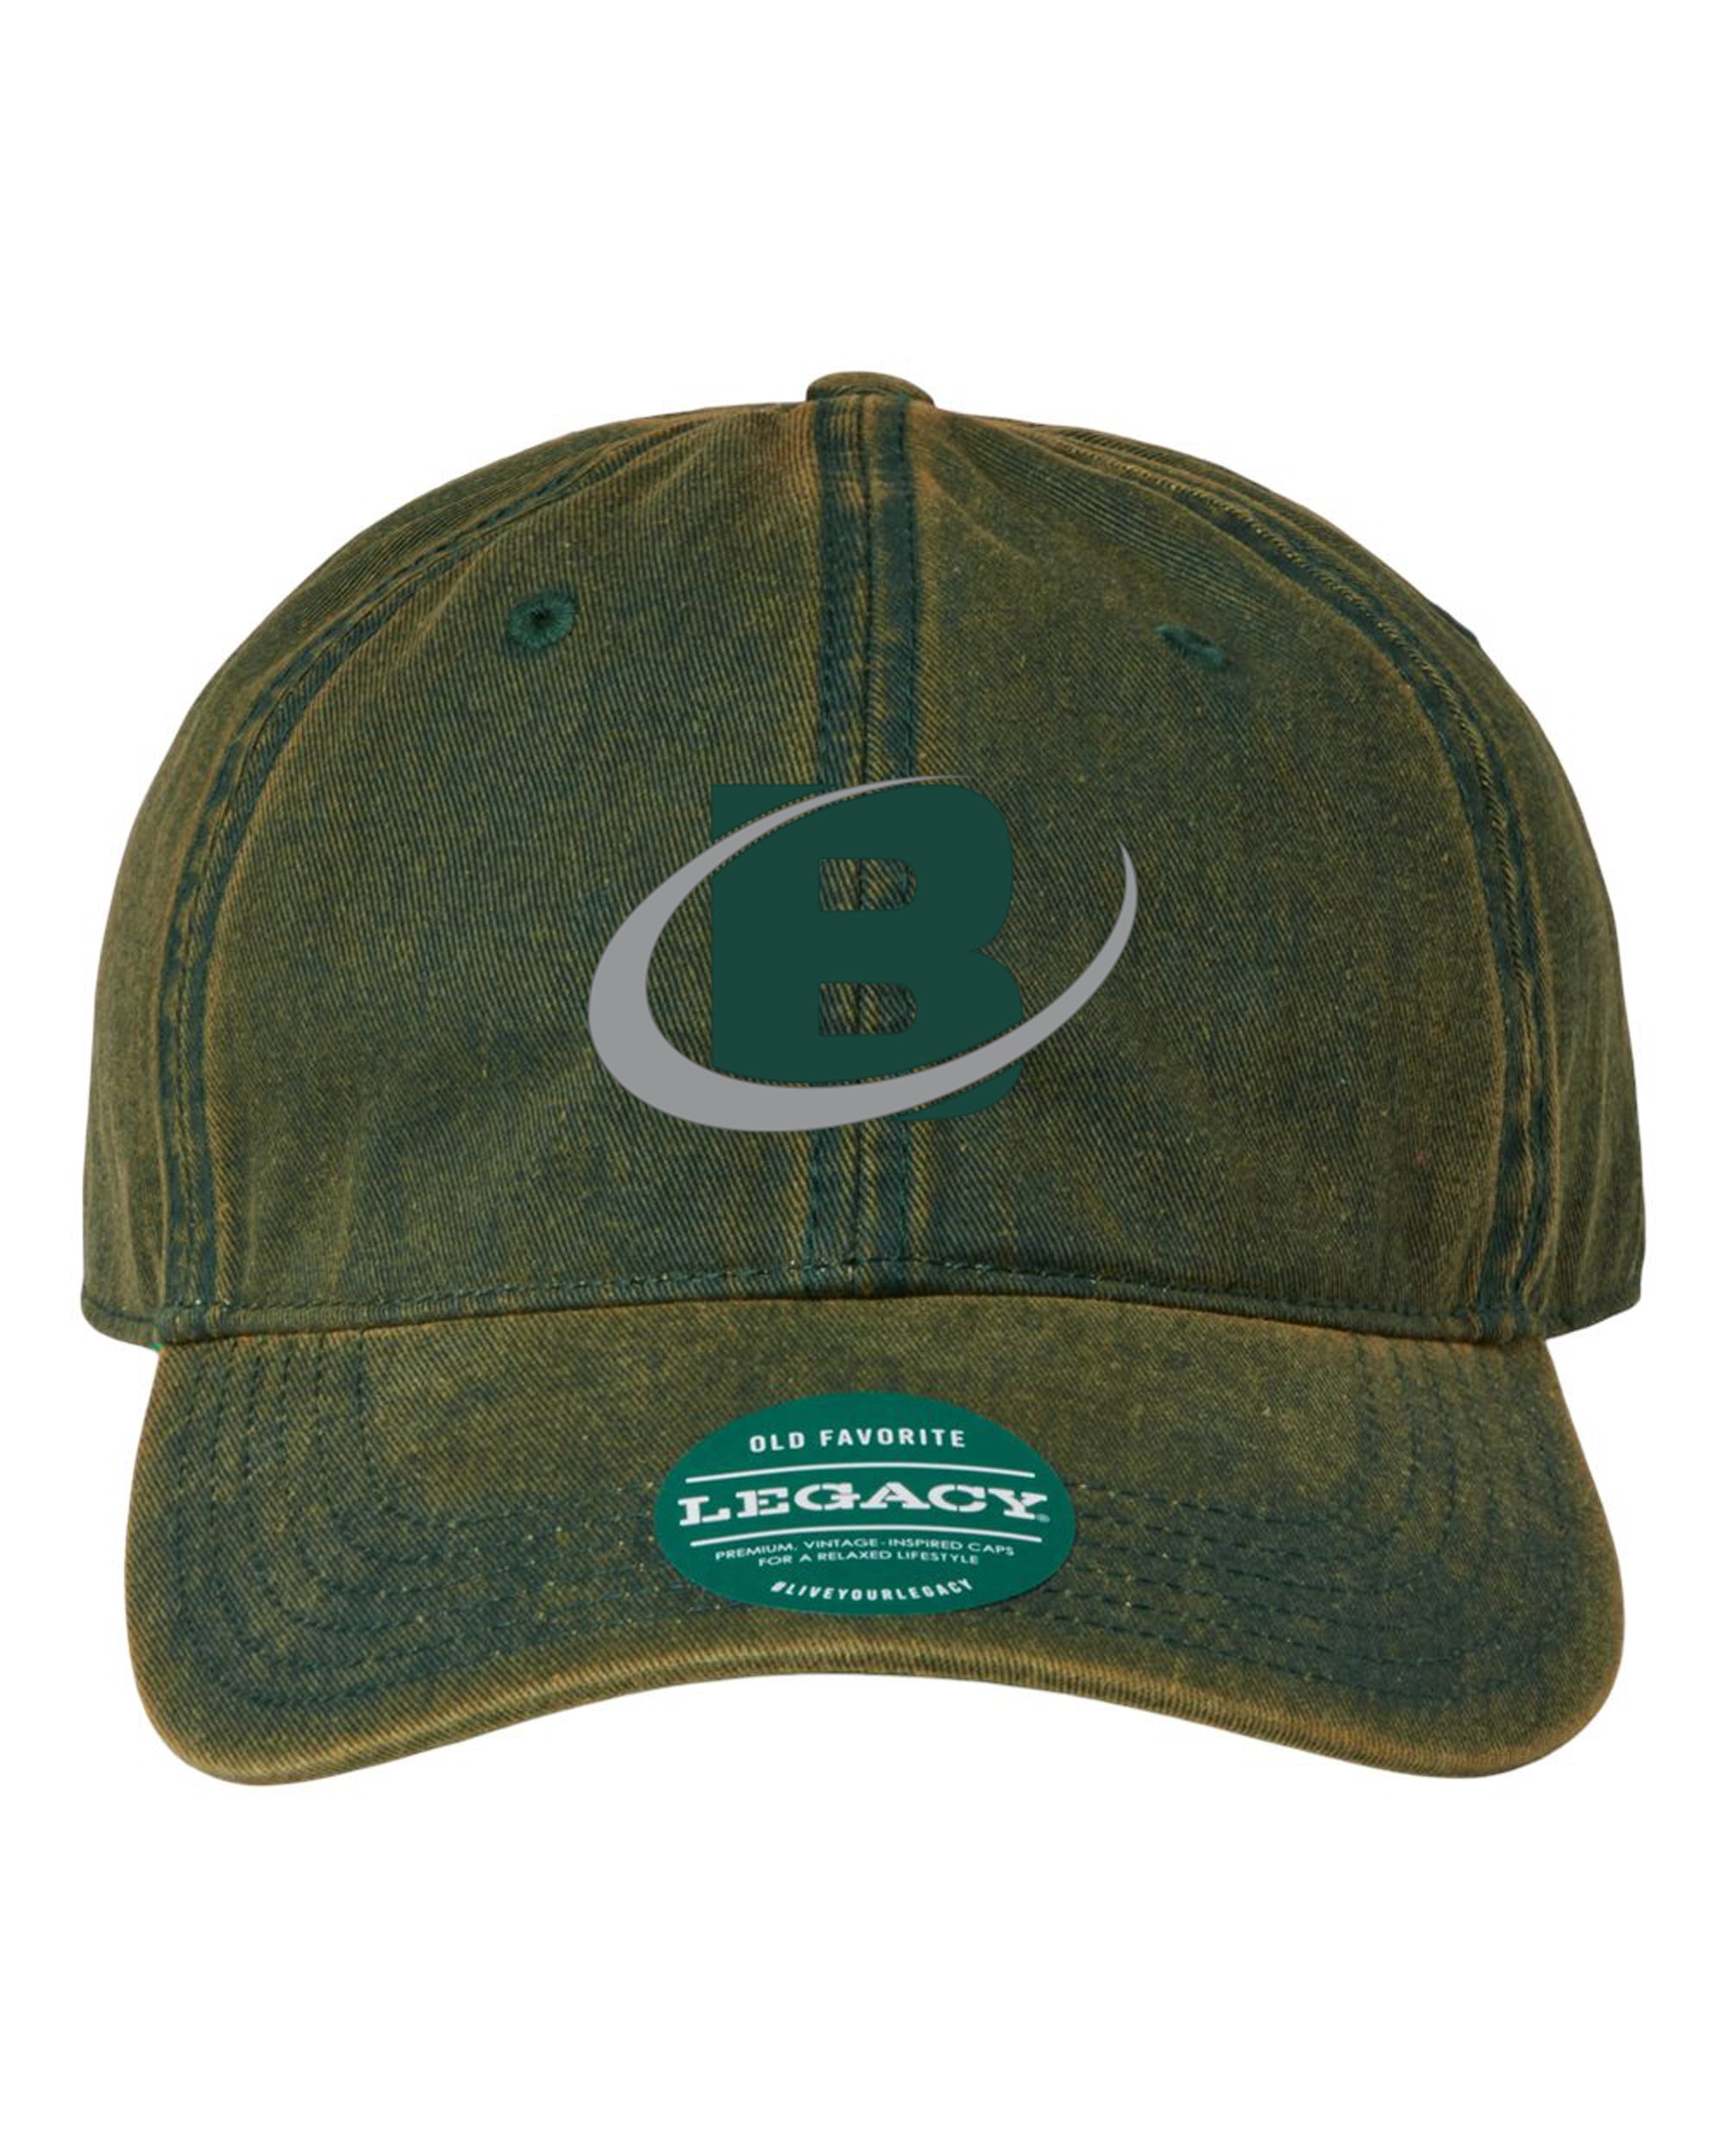 Bowman Turfgrass Professionals - Unstructured Hat